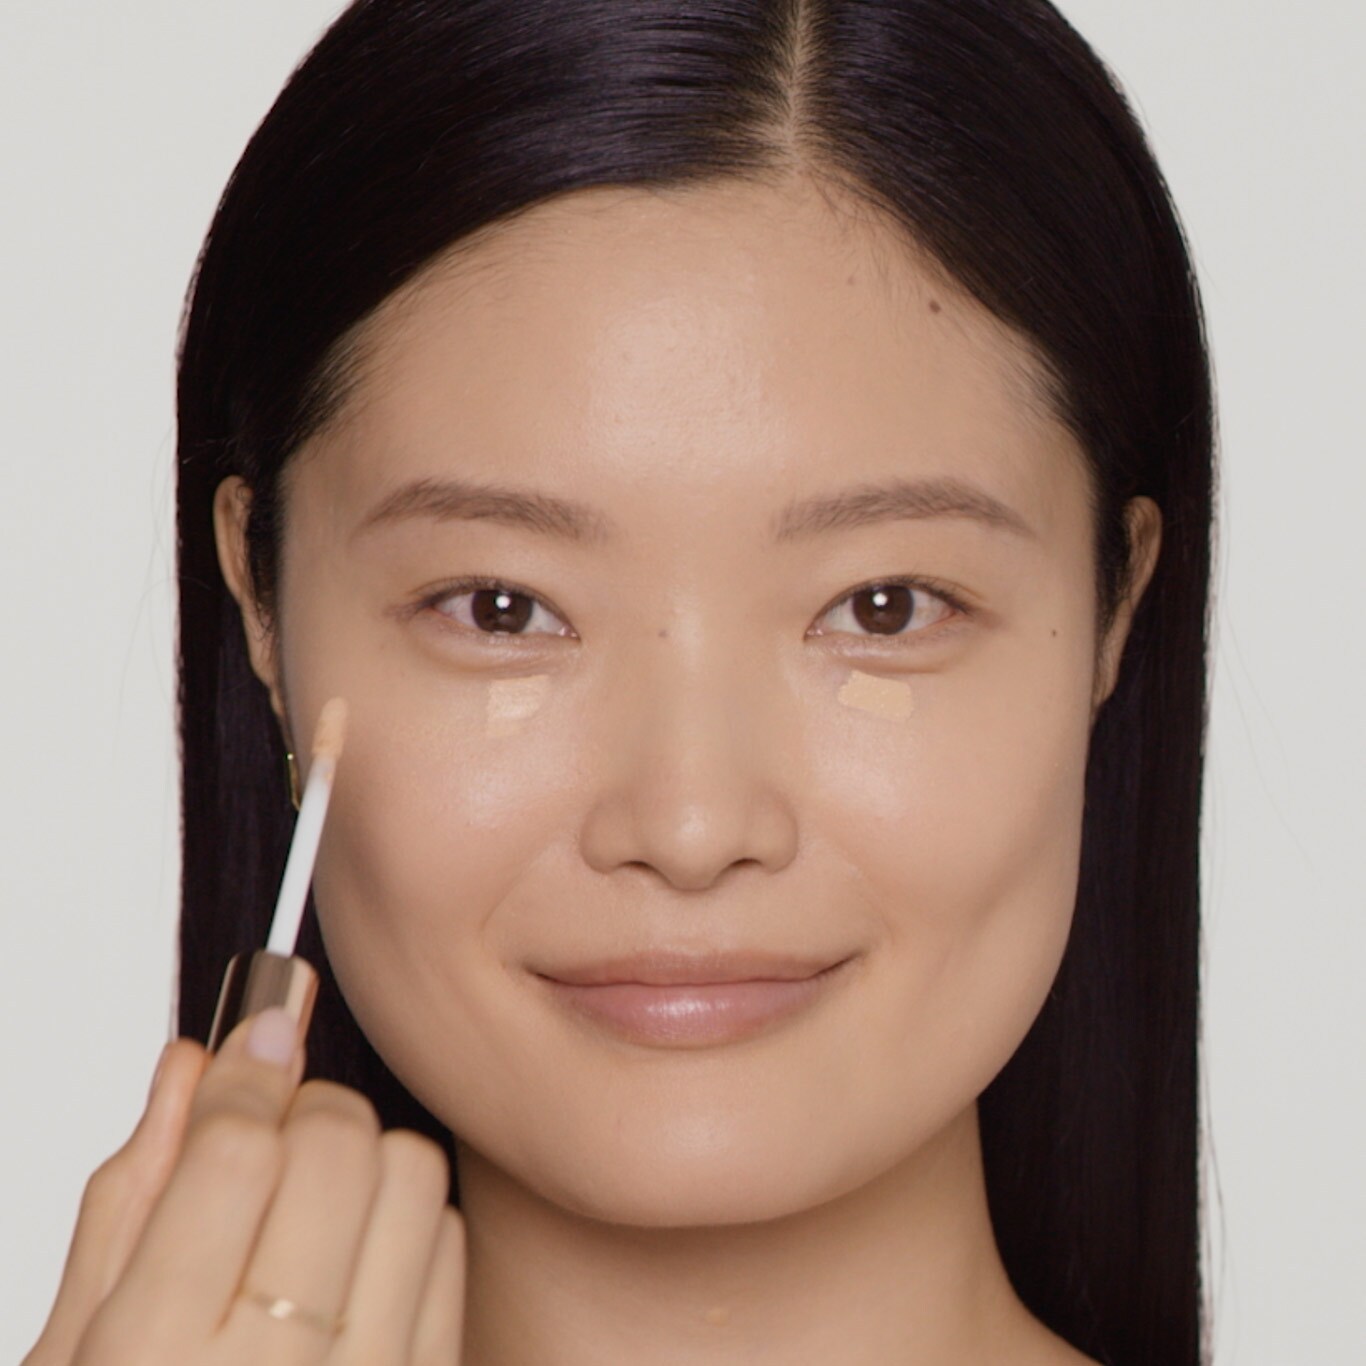 Model applies gel-creme to outer corner of eyes